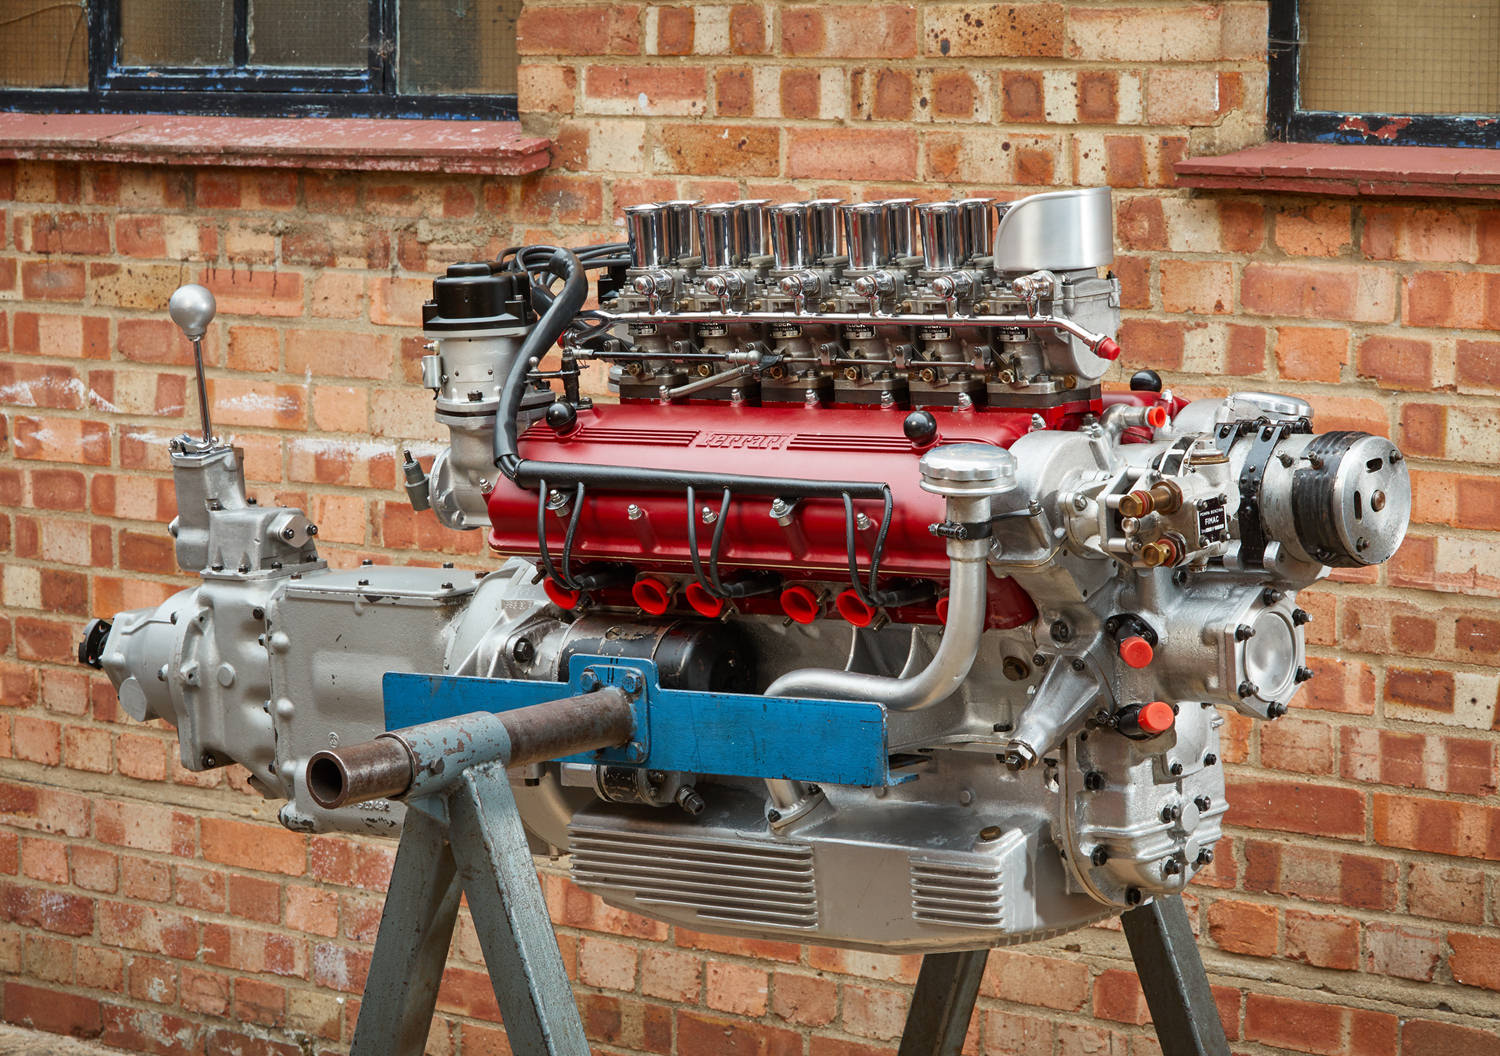 ferrari-250-gt-v12-engine-gearbox-for-sale